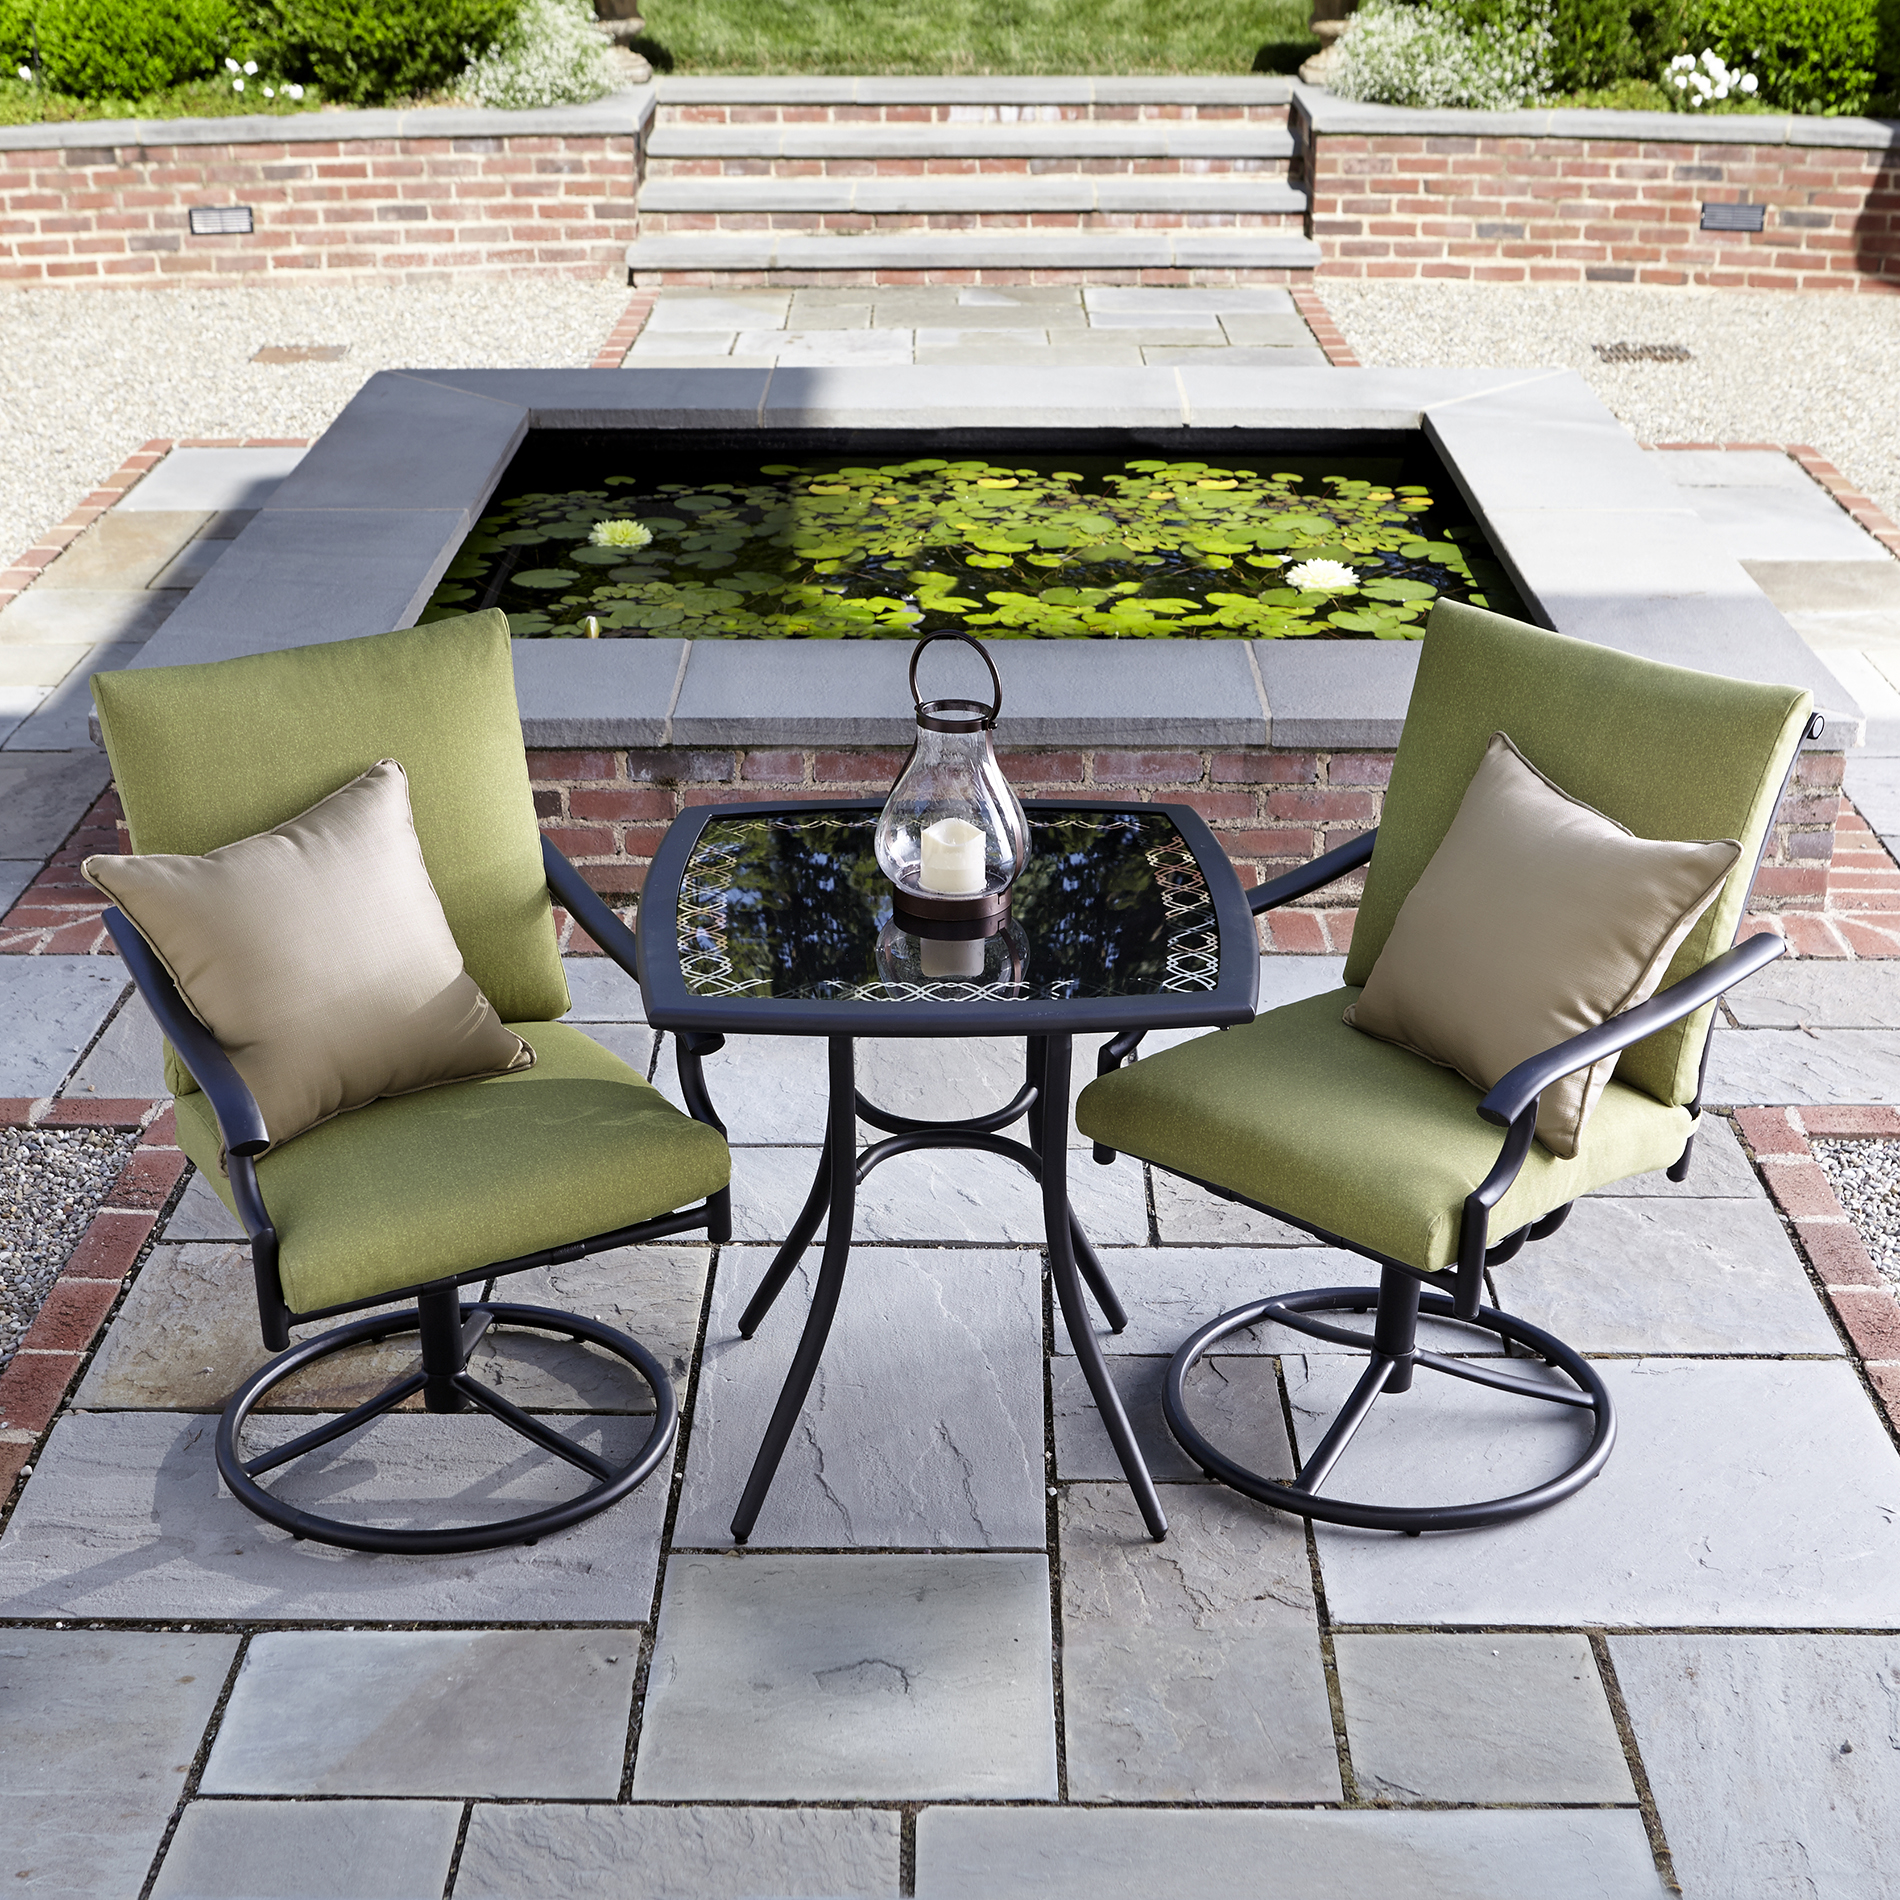 Outdoor Furniture: Creating A Relaxing Patio Or Garden Oasis